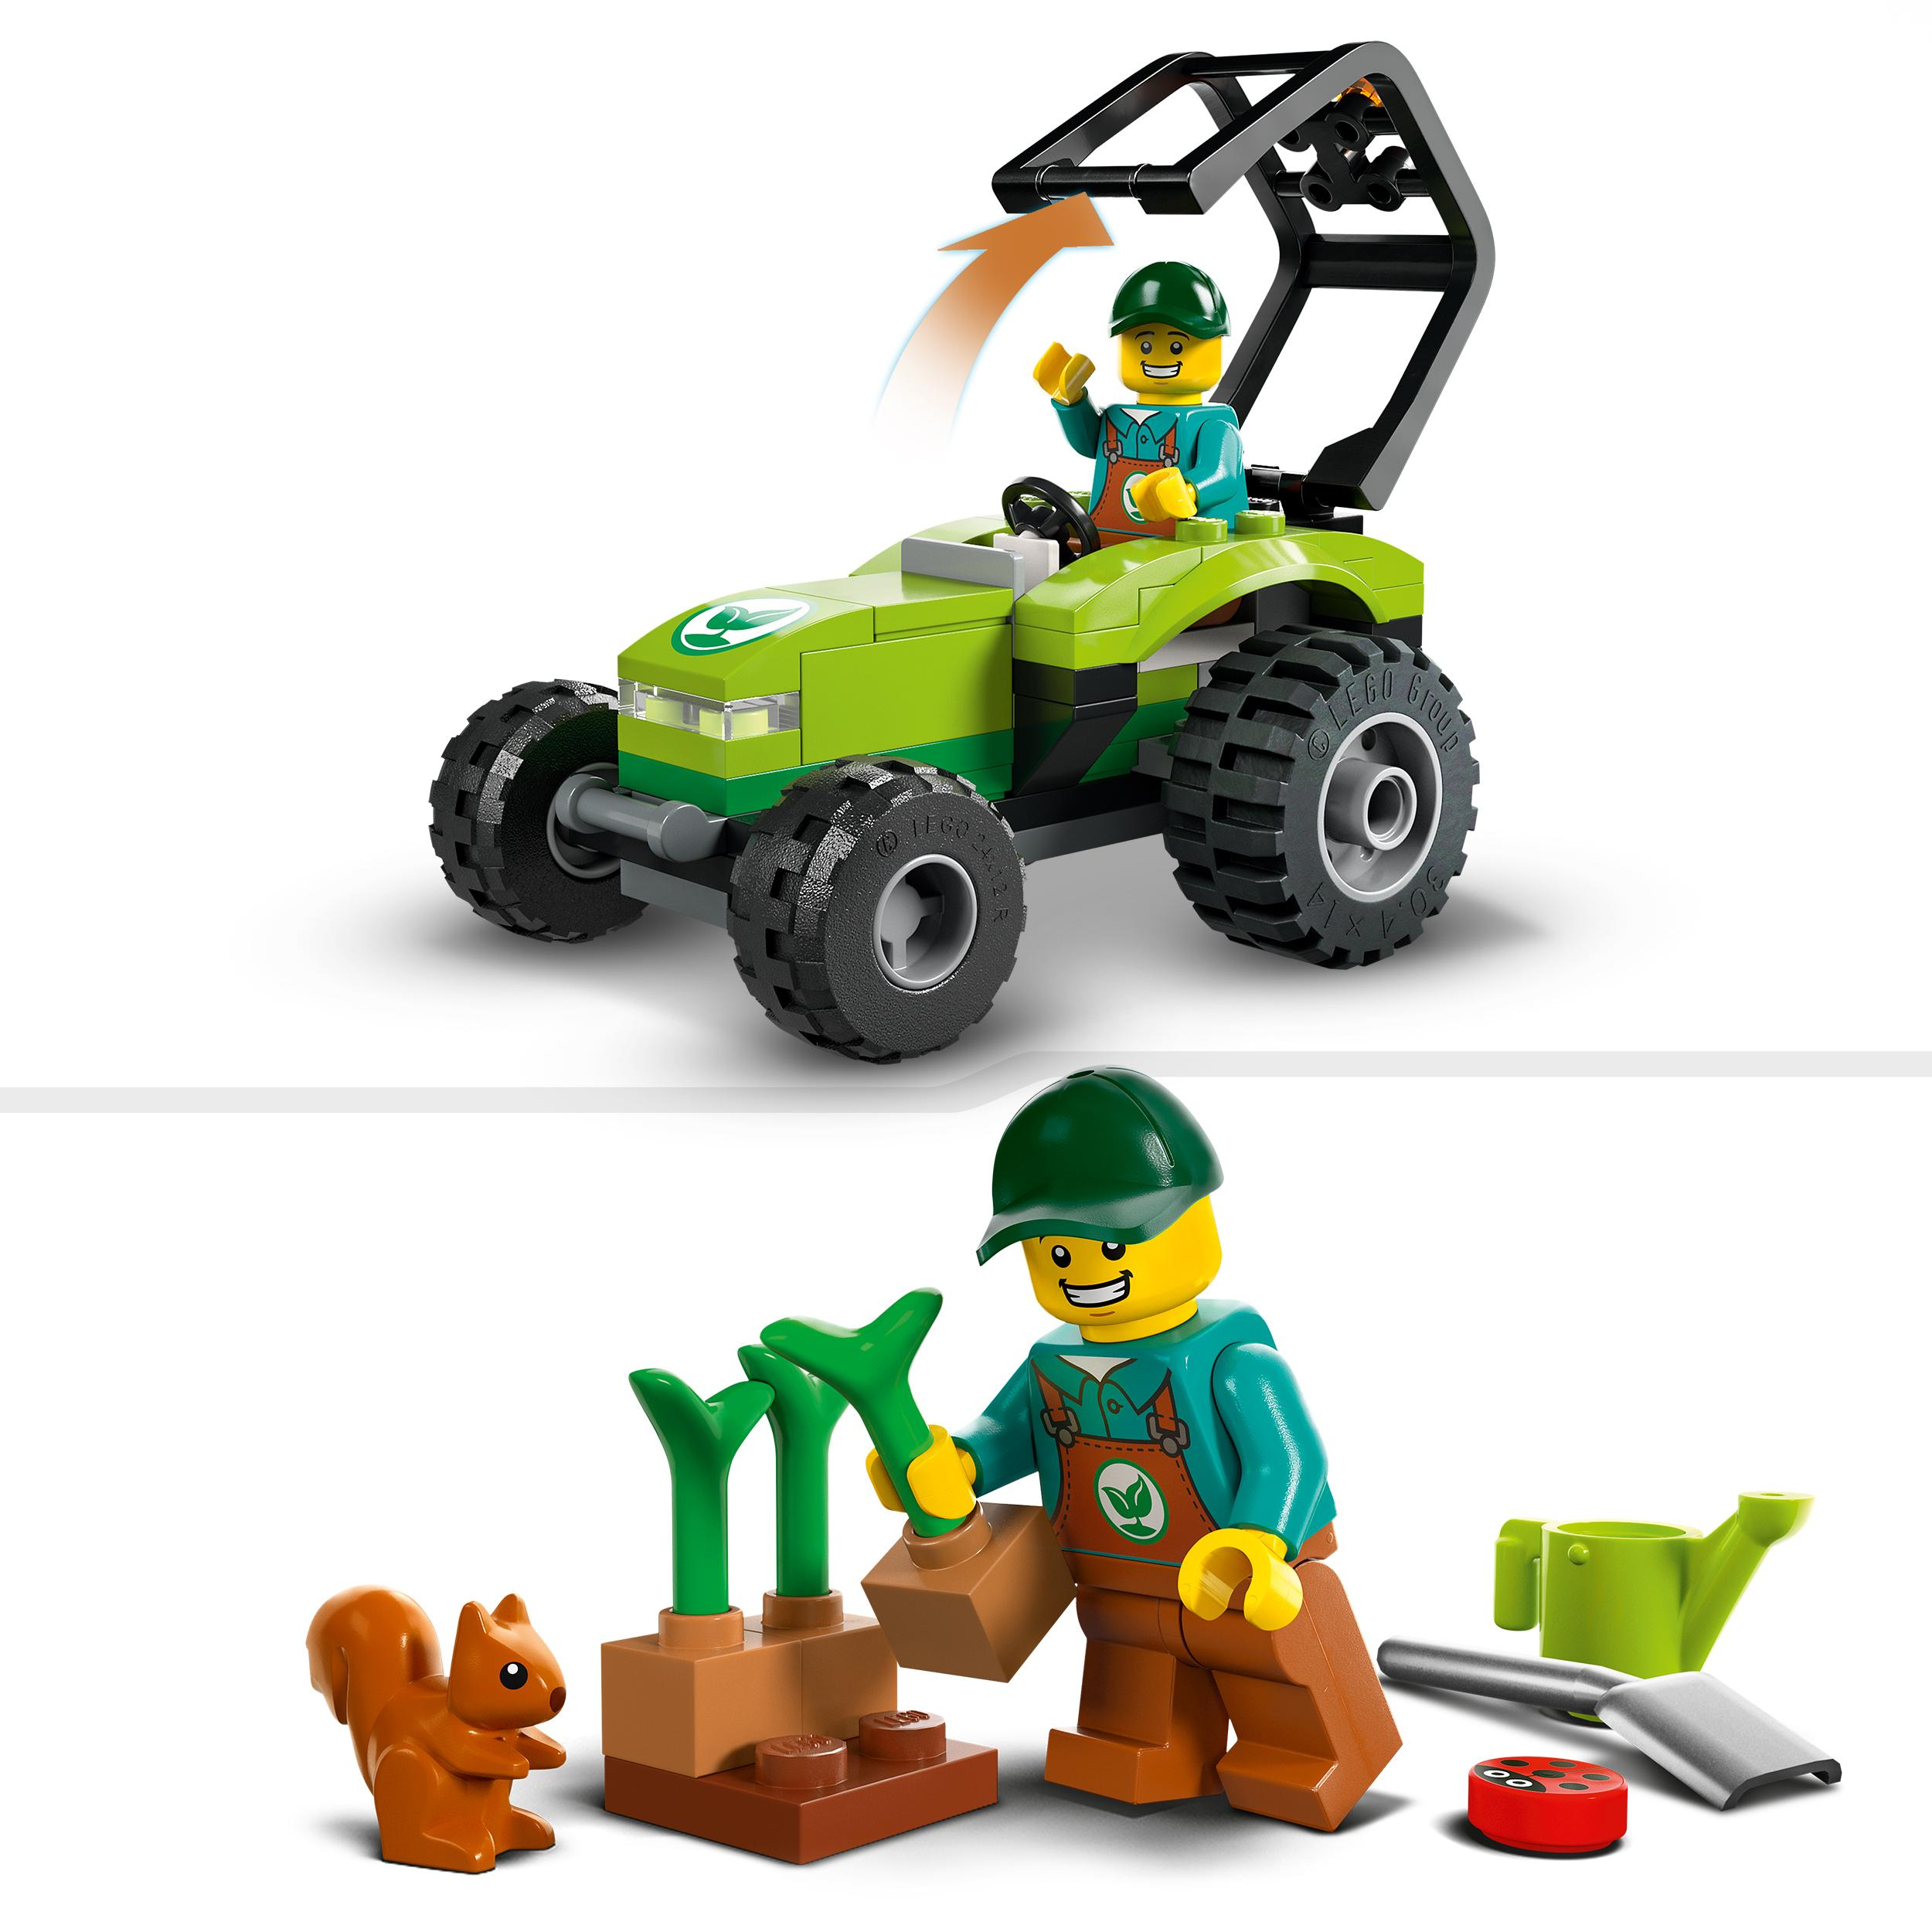 Mehrfarbig Bausatz, Kleintraktor City 60390 LEGO